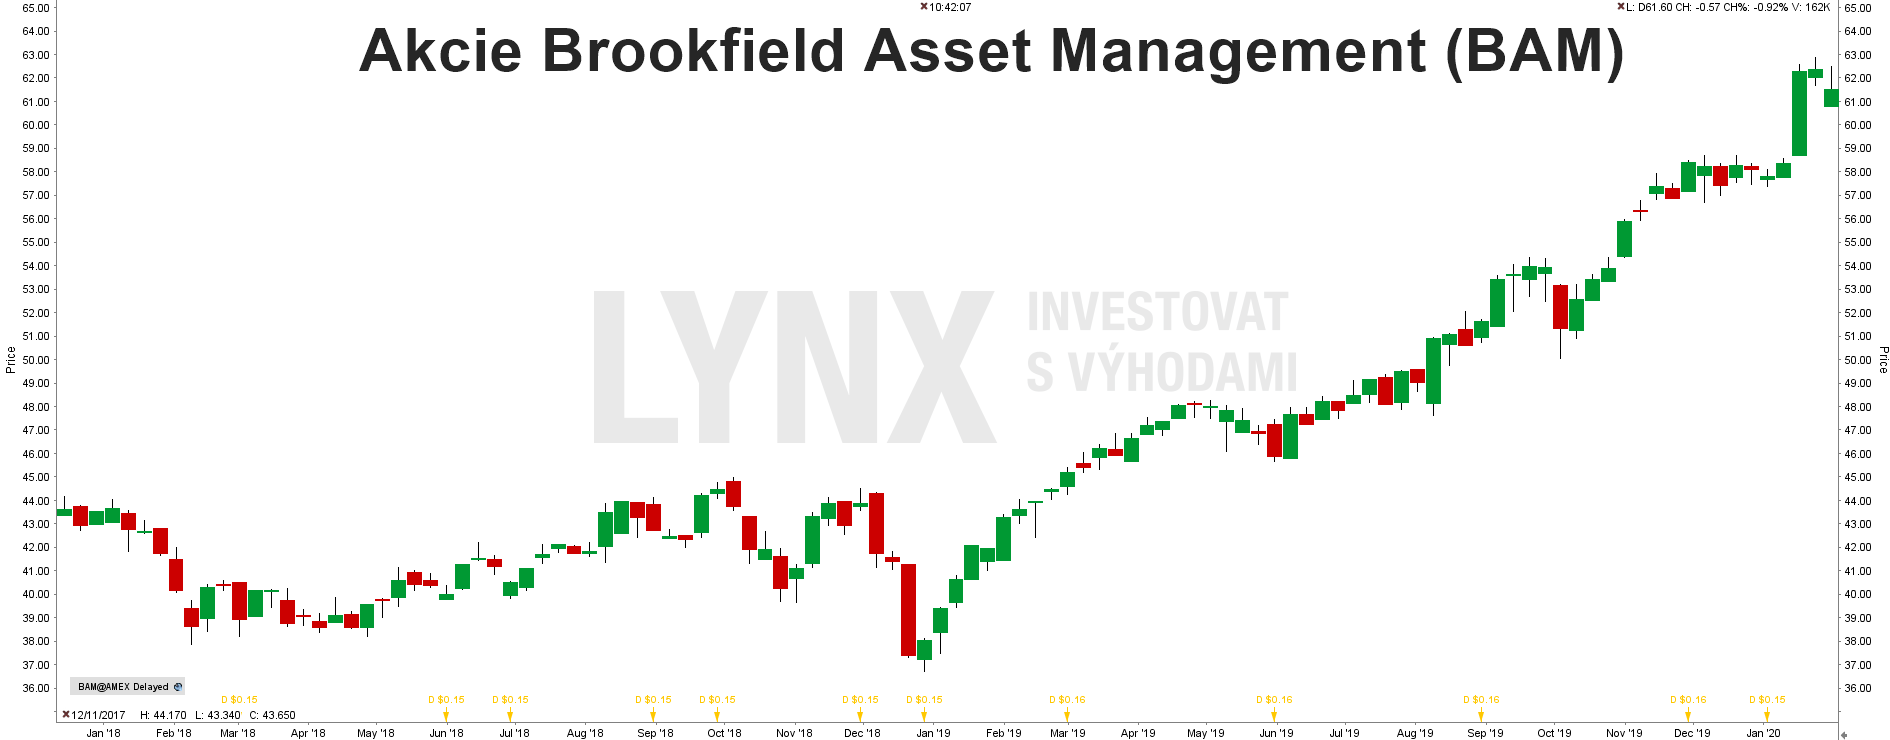 Akcie Brookfield Asset Management